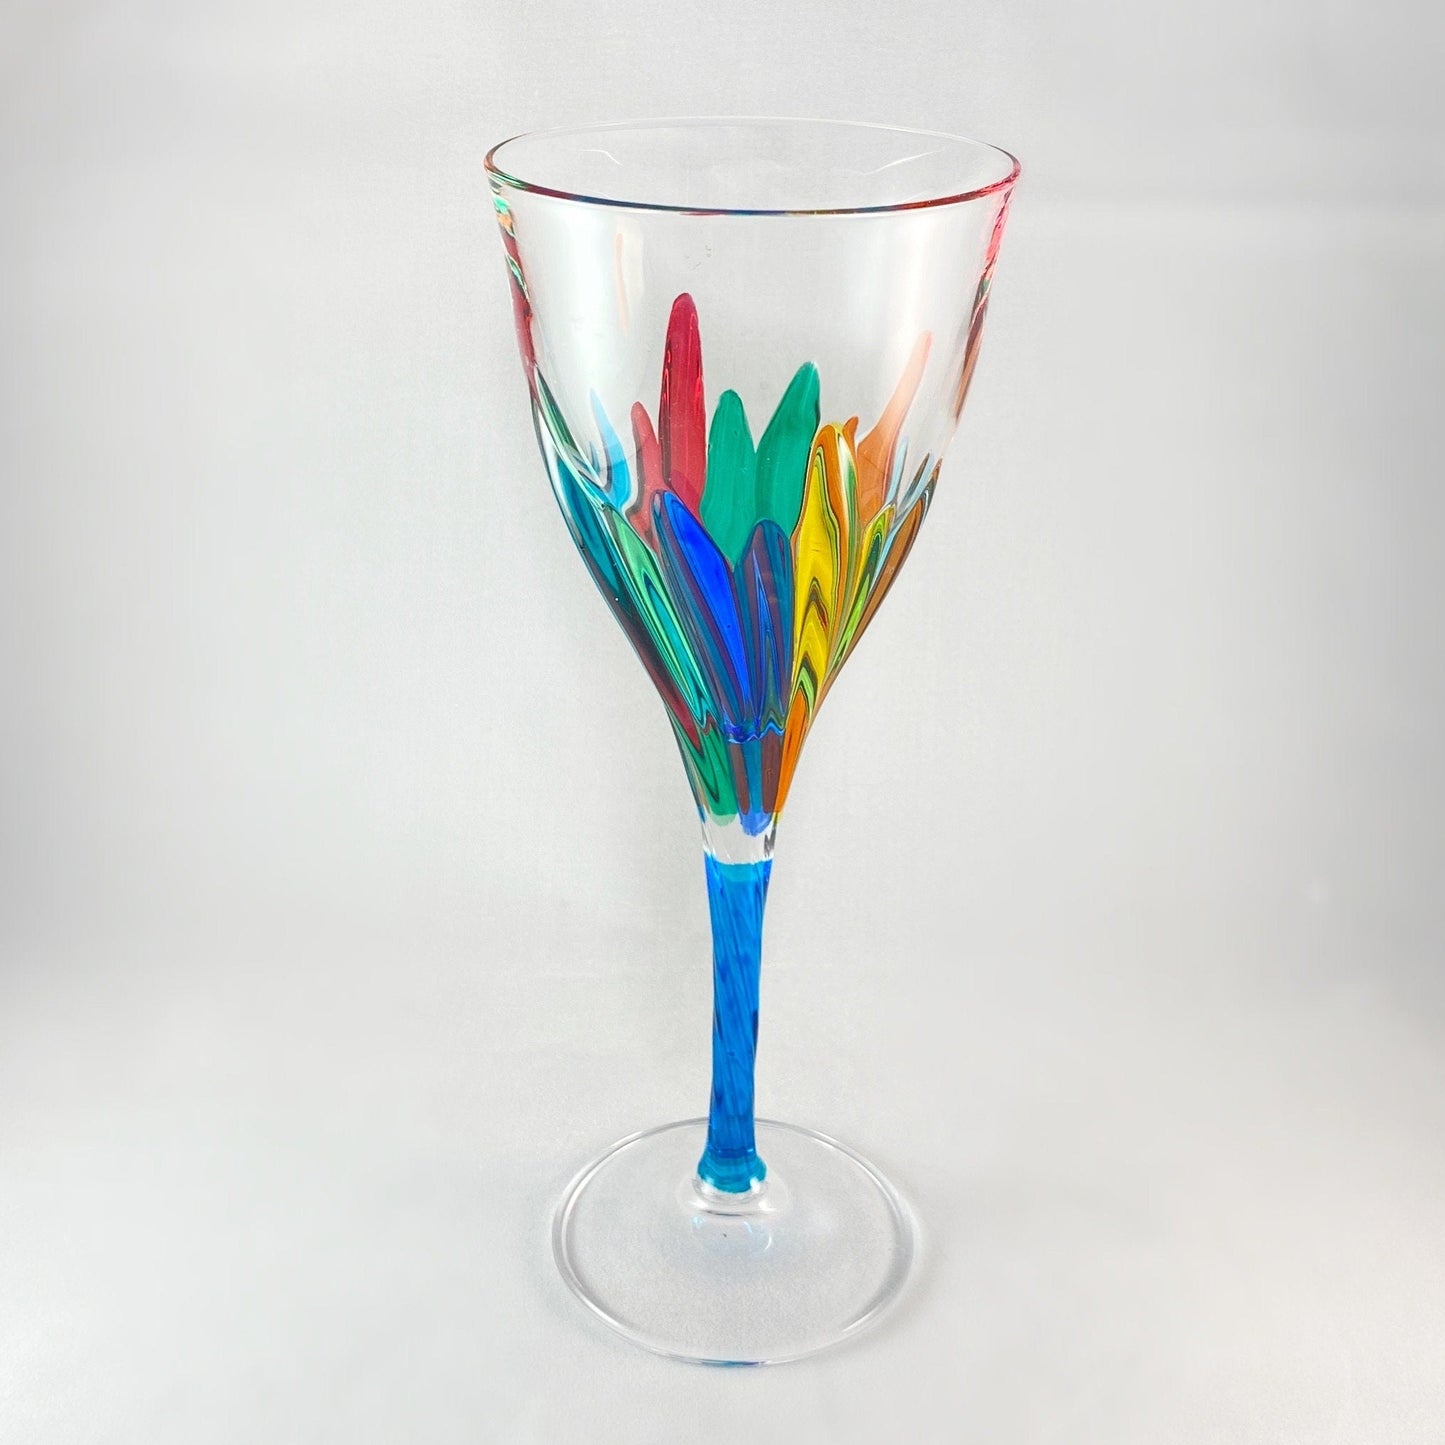 Aqua Blue Stem Fluente Venetian Wine Glass - Handmade in Italy, Colorful Murano Glass